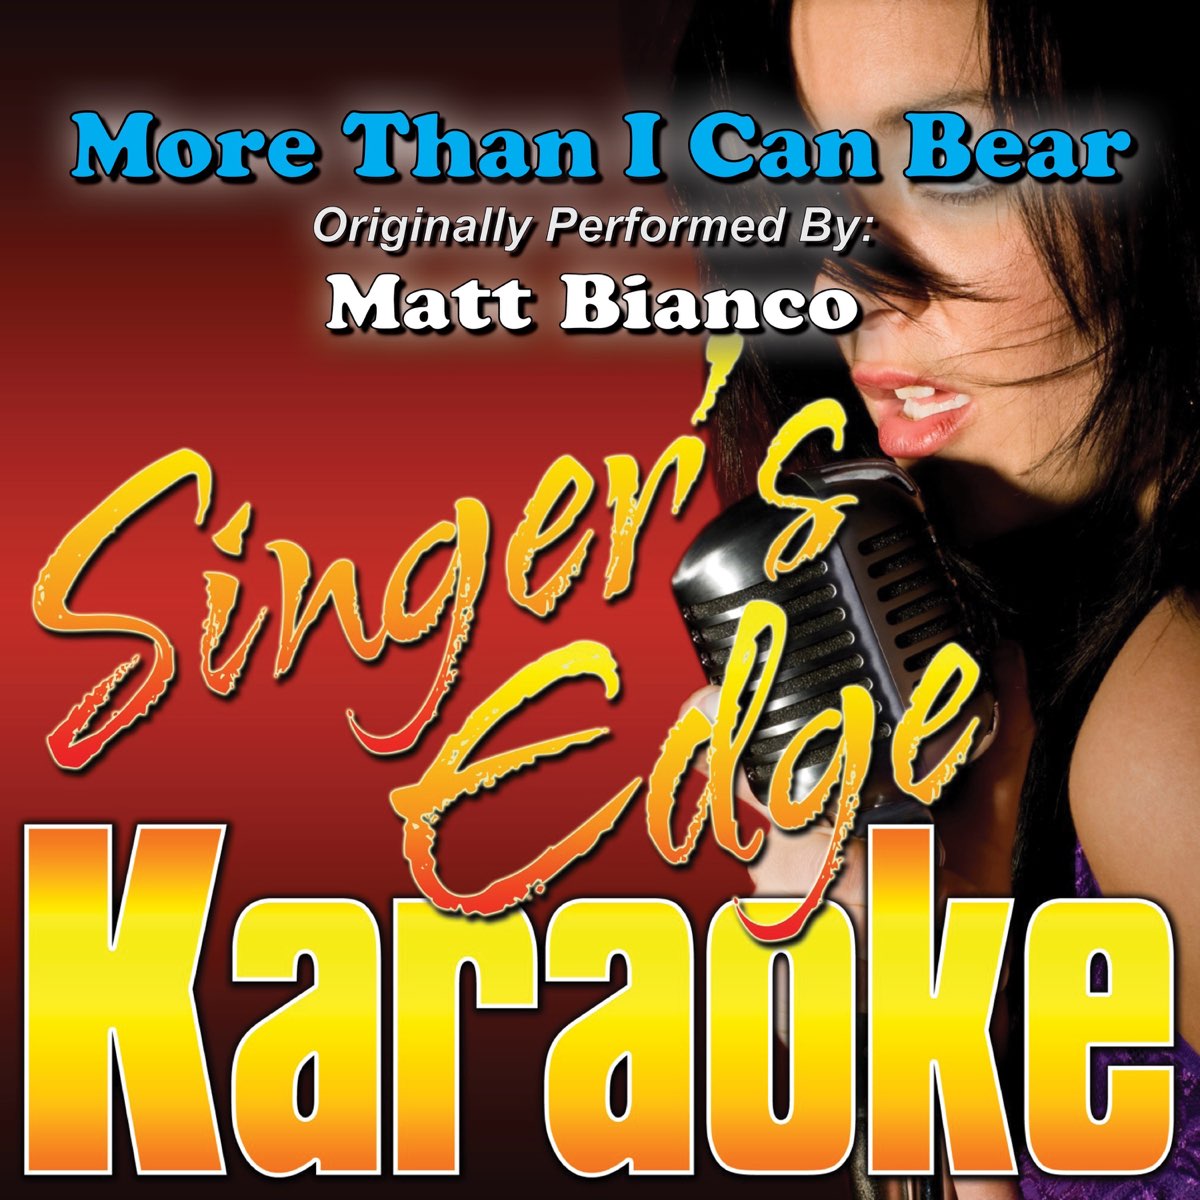 More Than I Can Bear (Originally Performed By Matt Bianco) [Karaoke  Version] - Single by Singer's Edge Karaoke on Apple Music